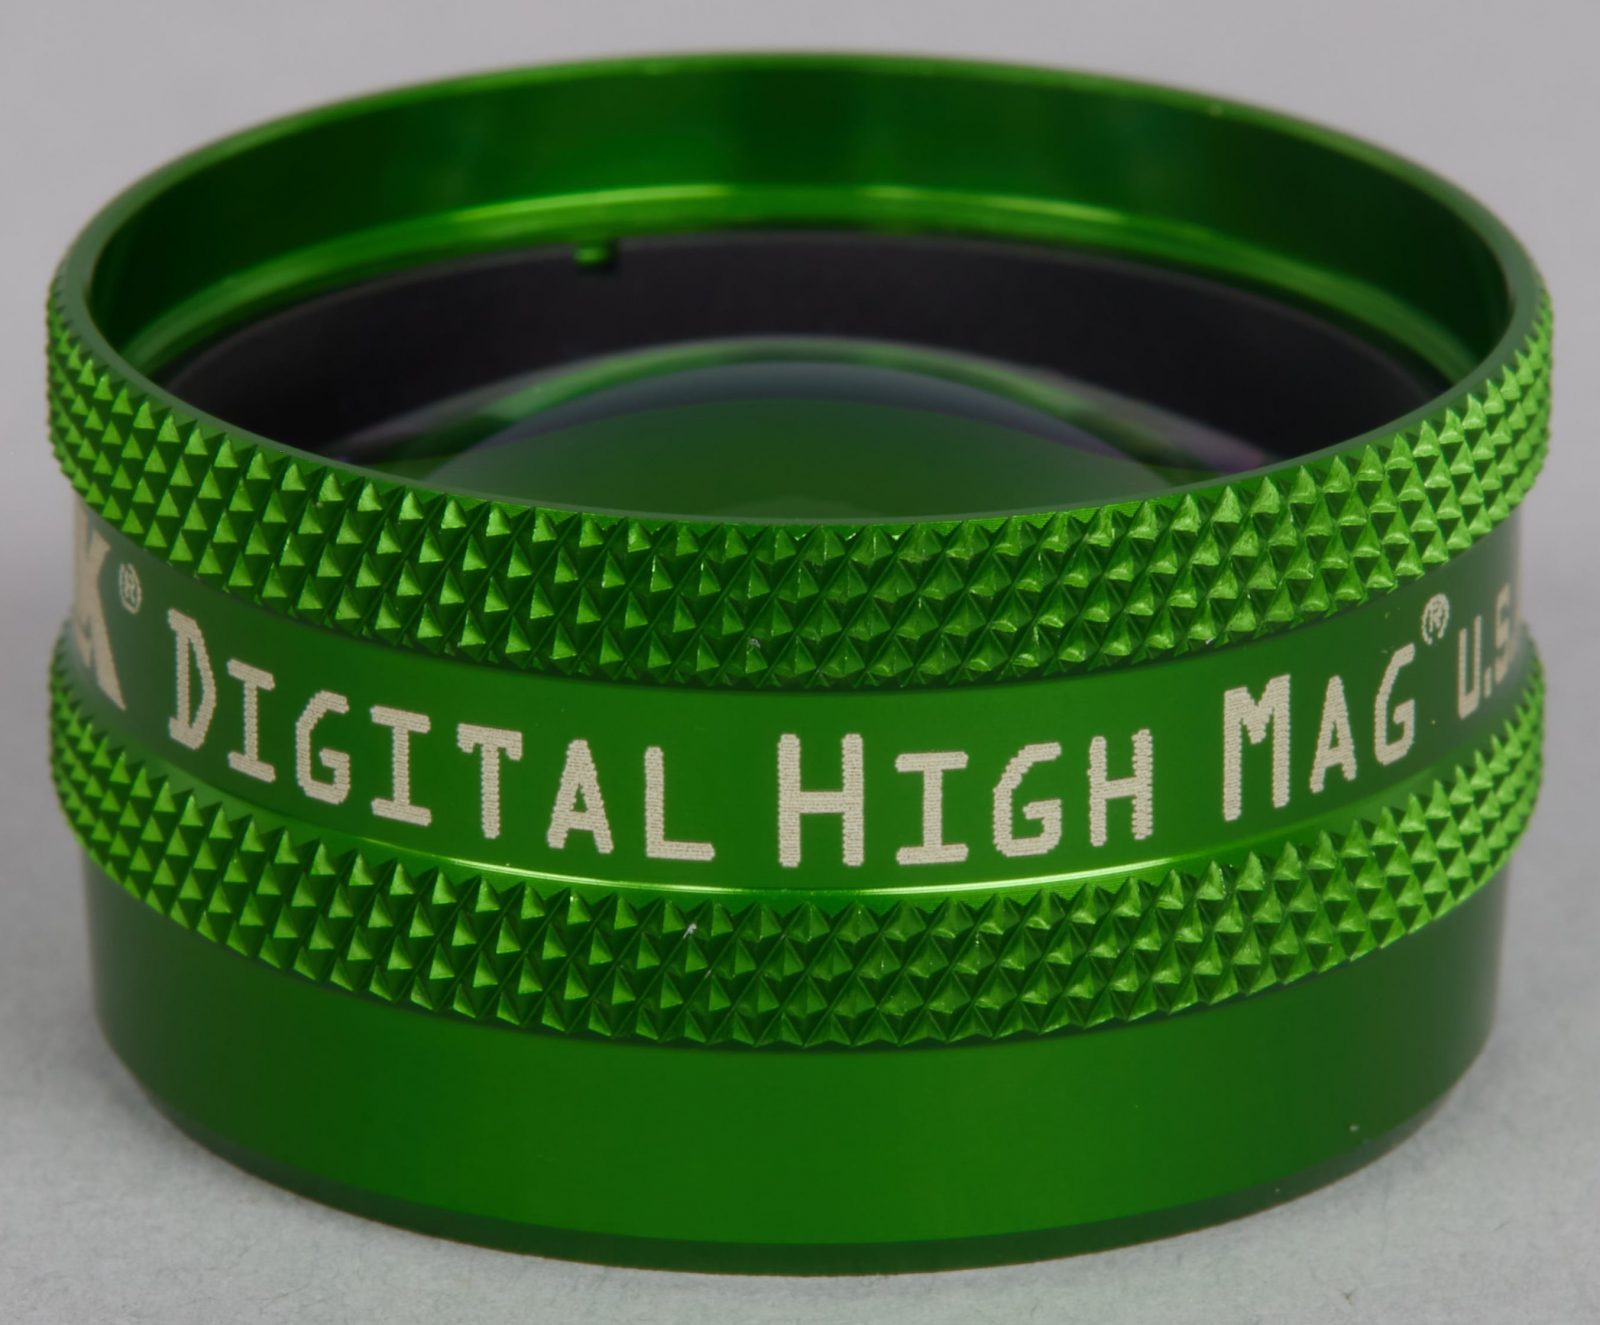 Digital High Mag® (Green Ring)